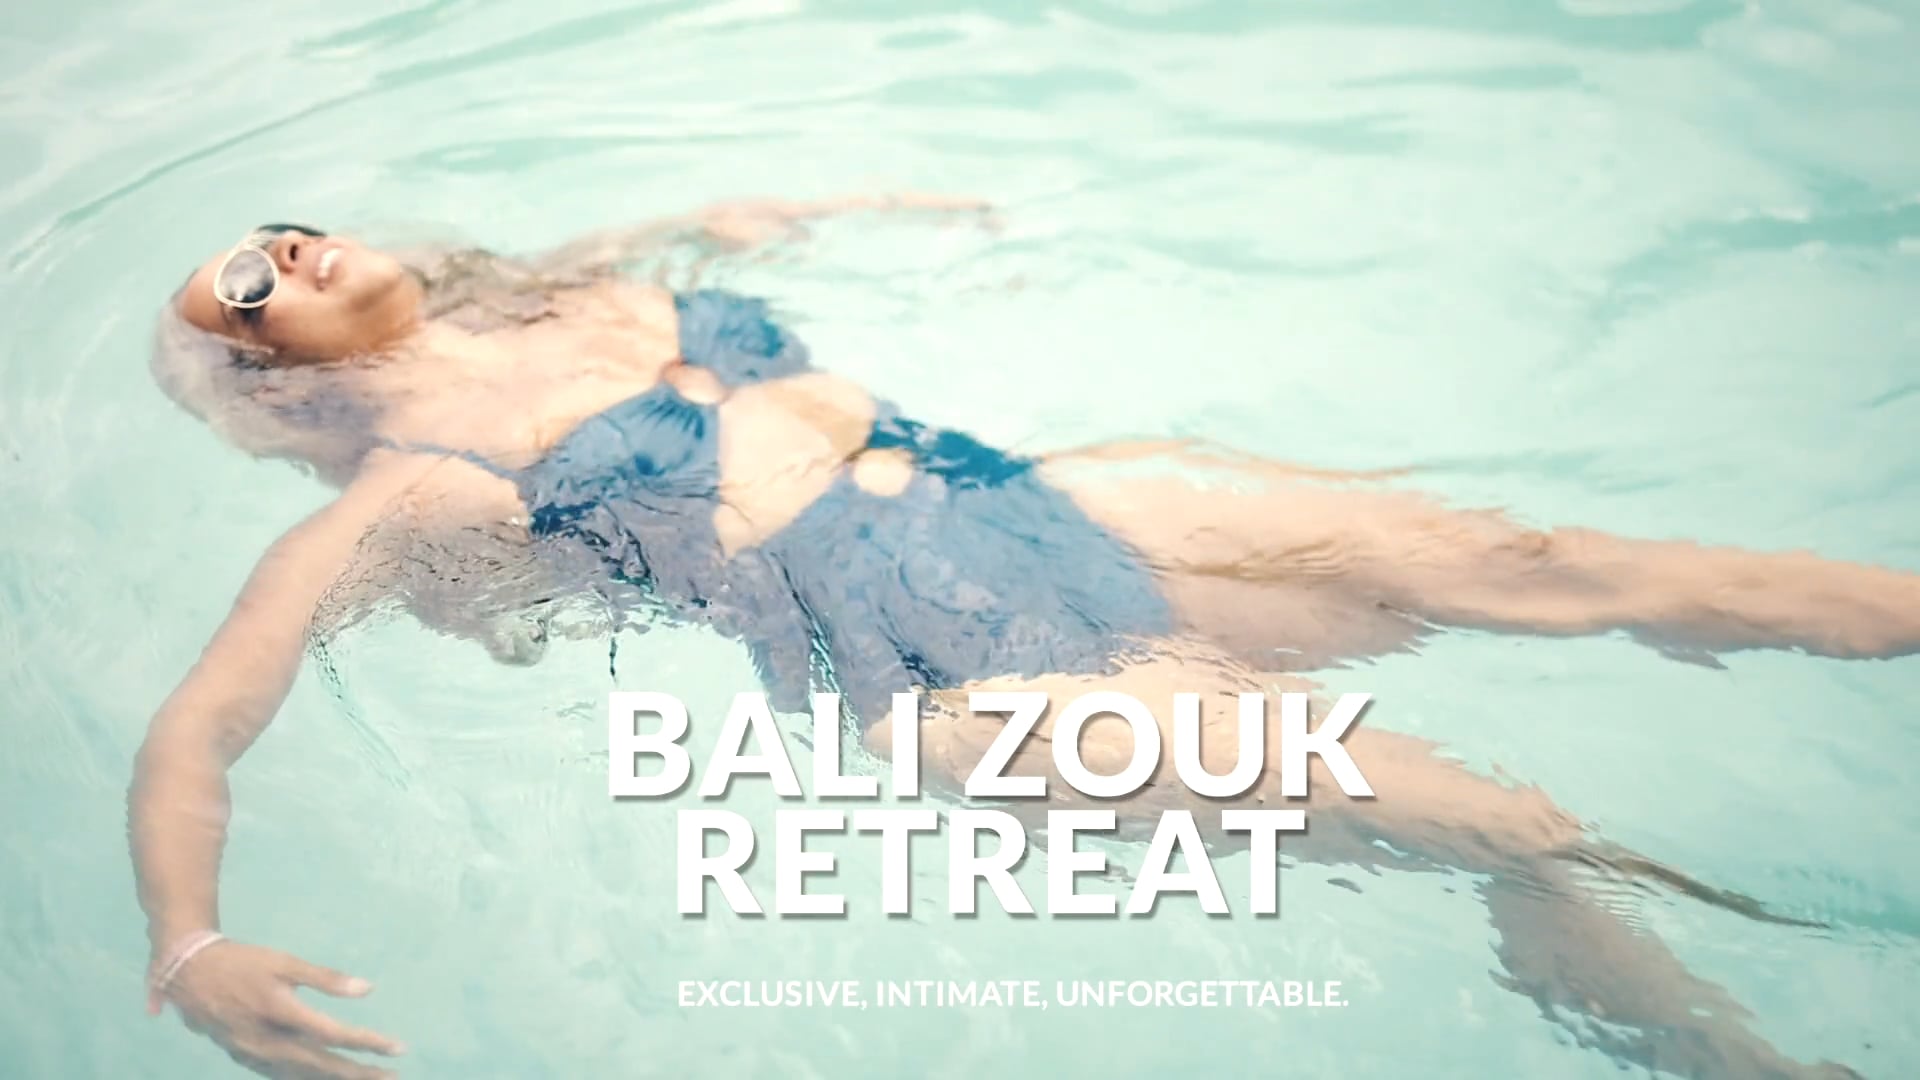 Events - Bali Zouk Retreat